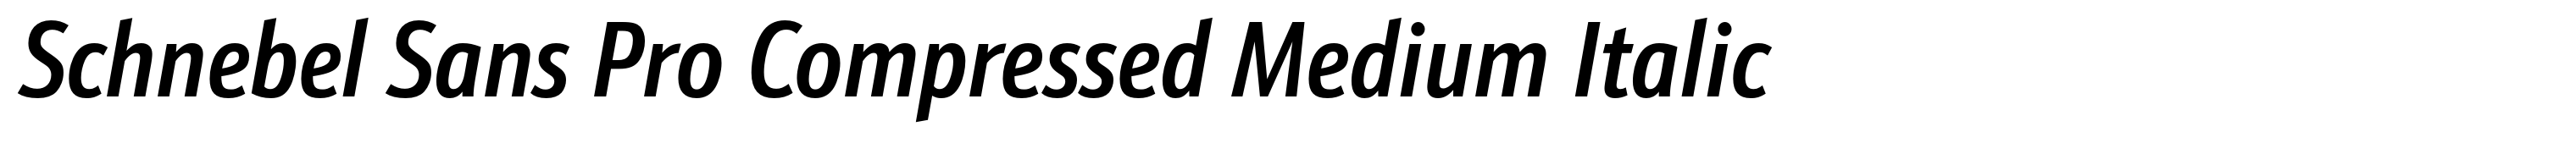 Schnebel Sans Pro Compressed Medium Italic